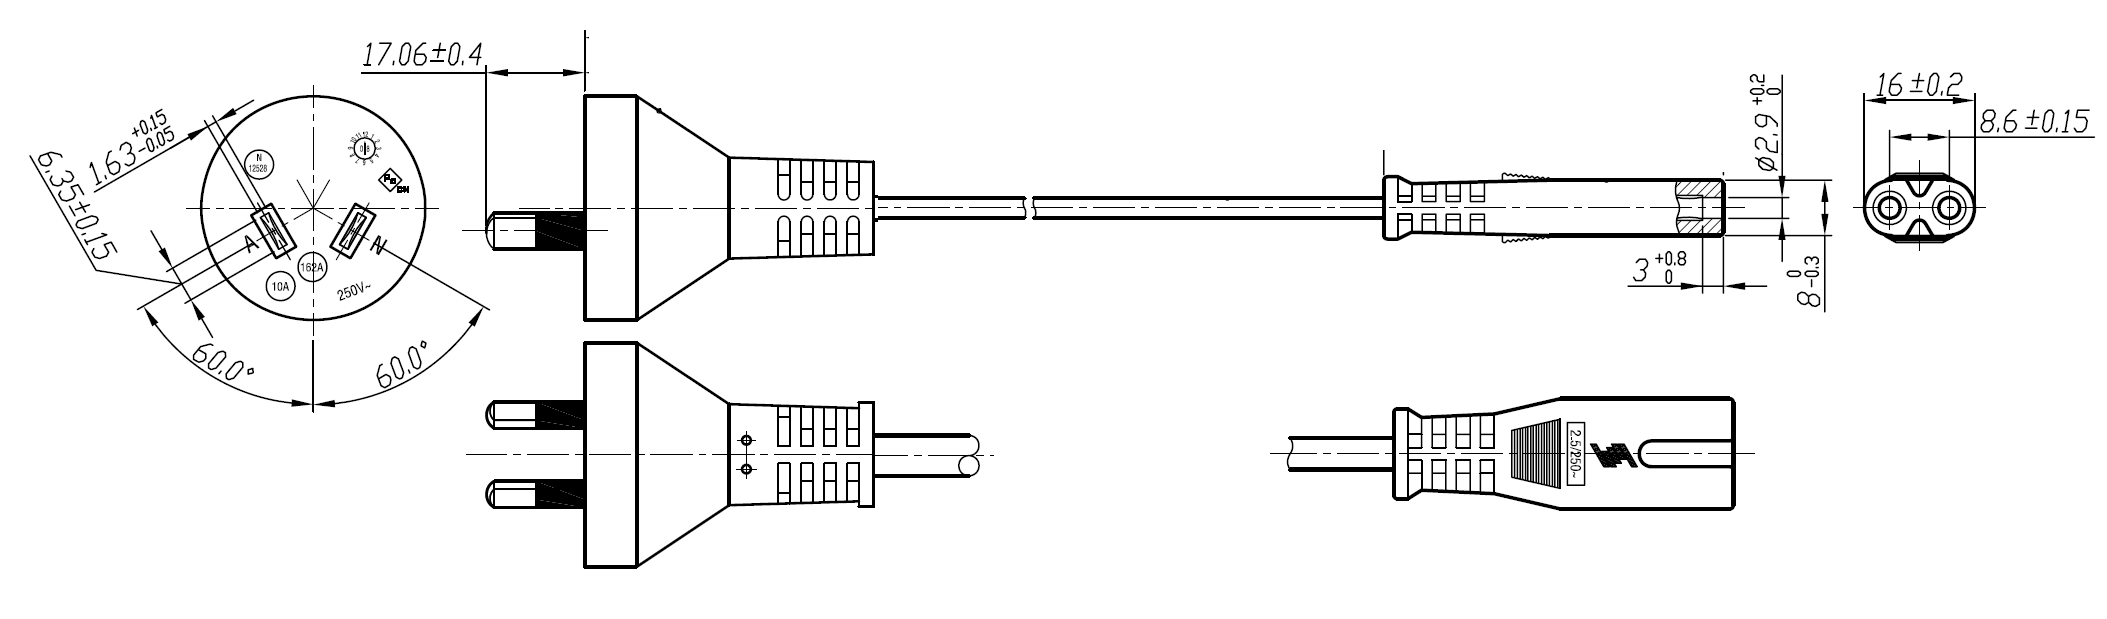 3 Pin Plug Wiring Diagram Nz - CIKTUTOR